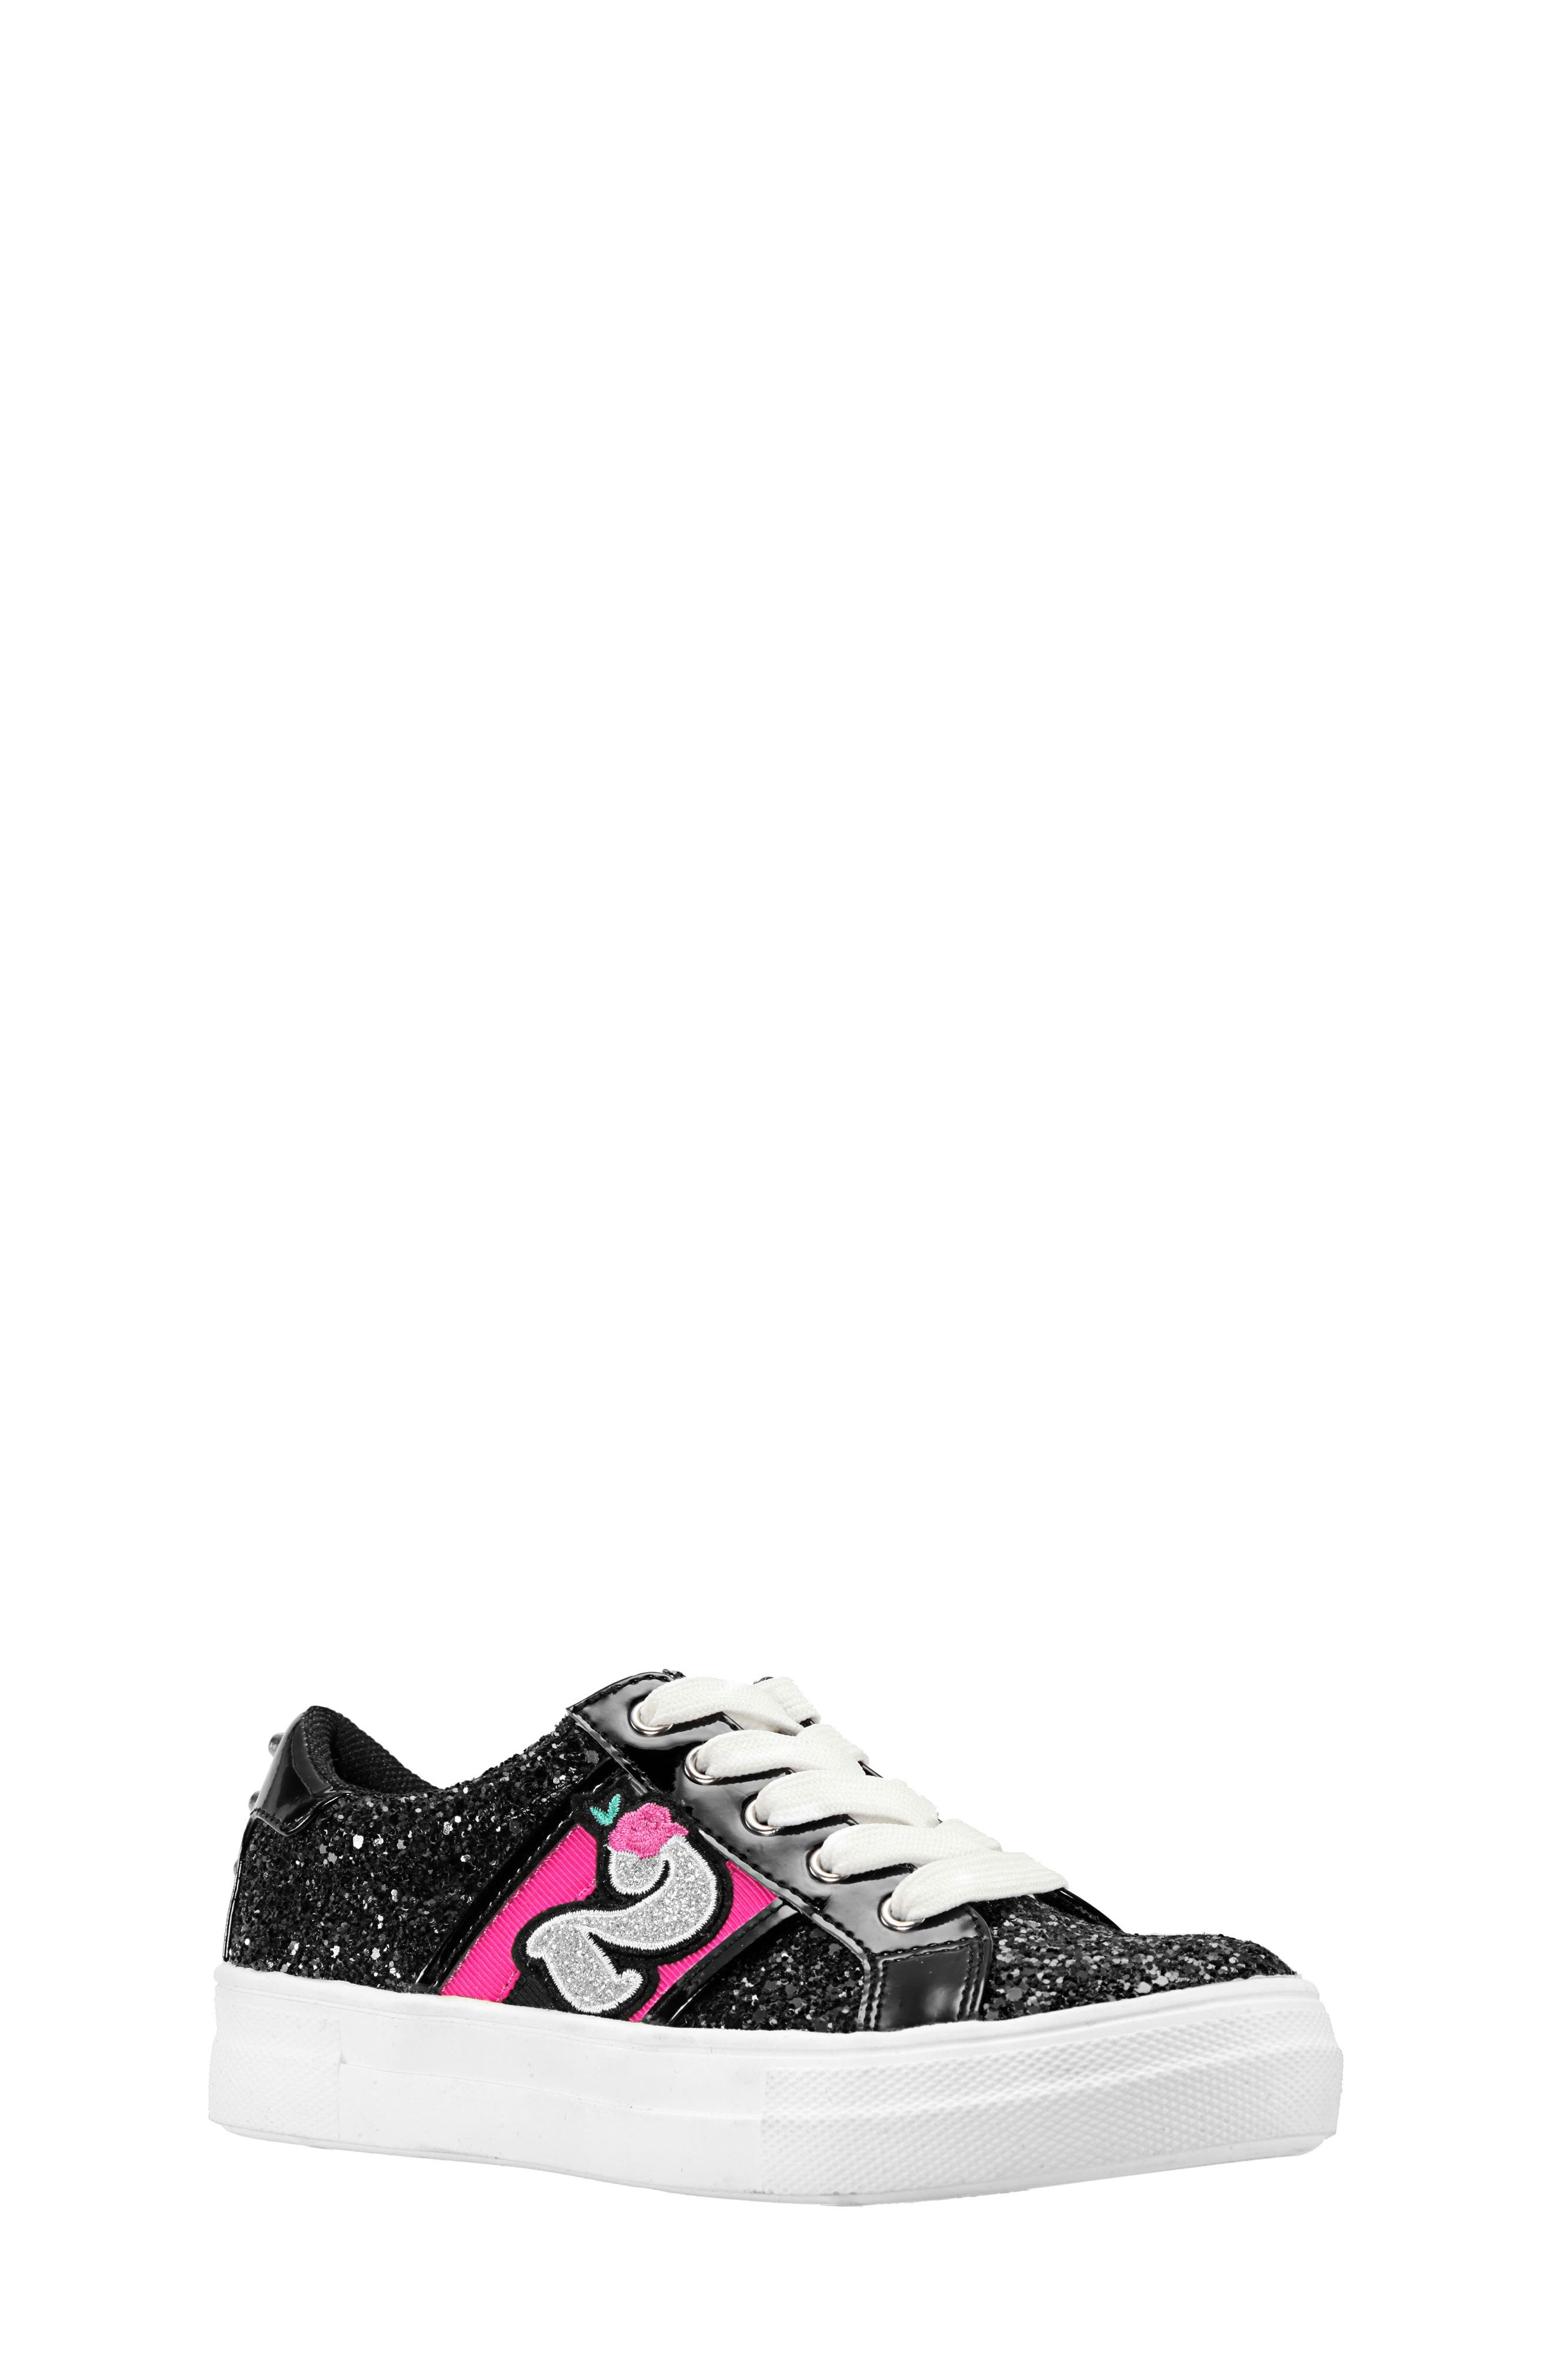 UPC 794378364276 product image for Toddler Girl's Nina Hazeline-N Glitter Sneaker, Size 11 M - Black | upcitemdb.com